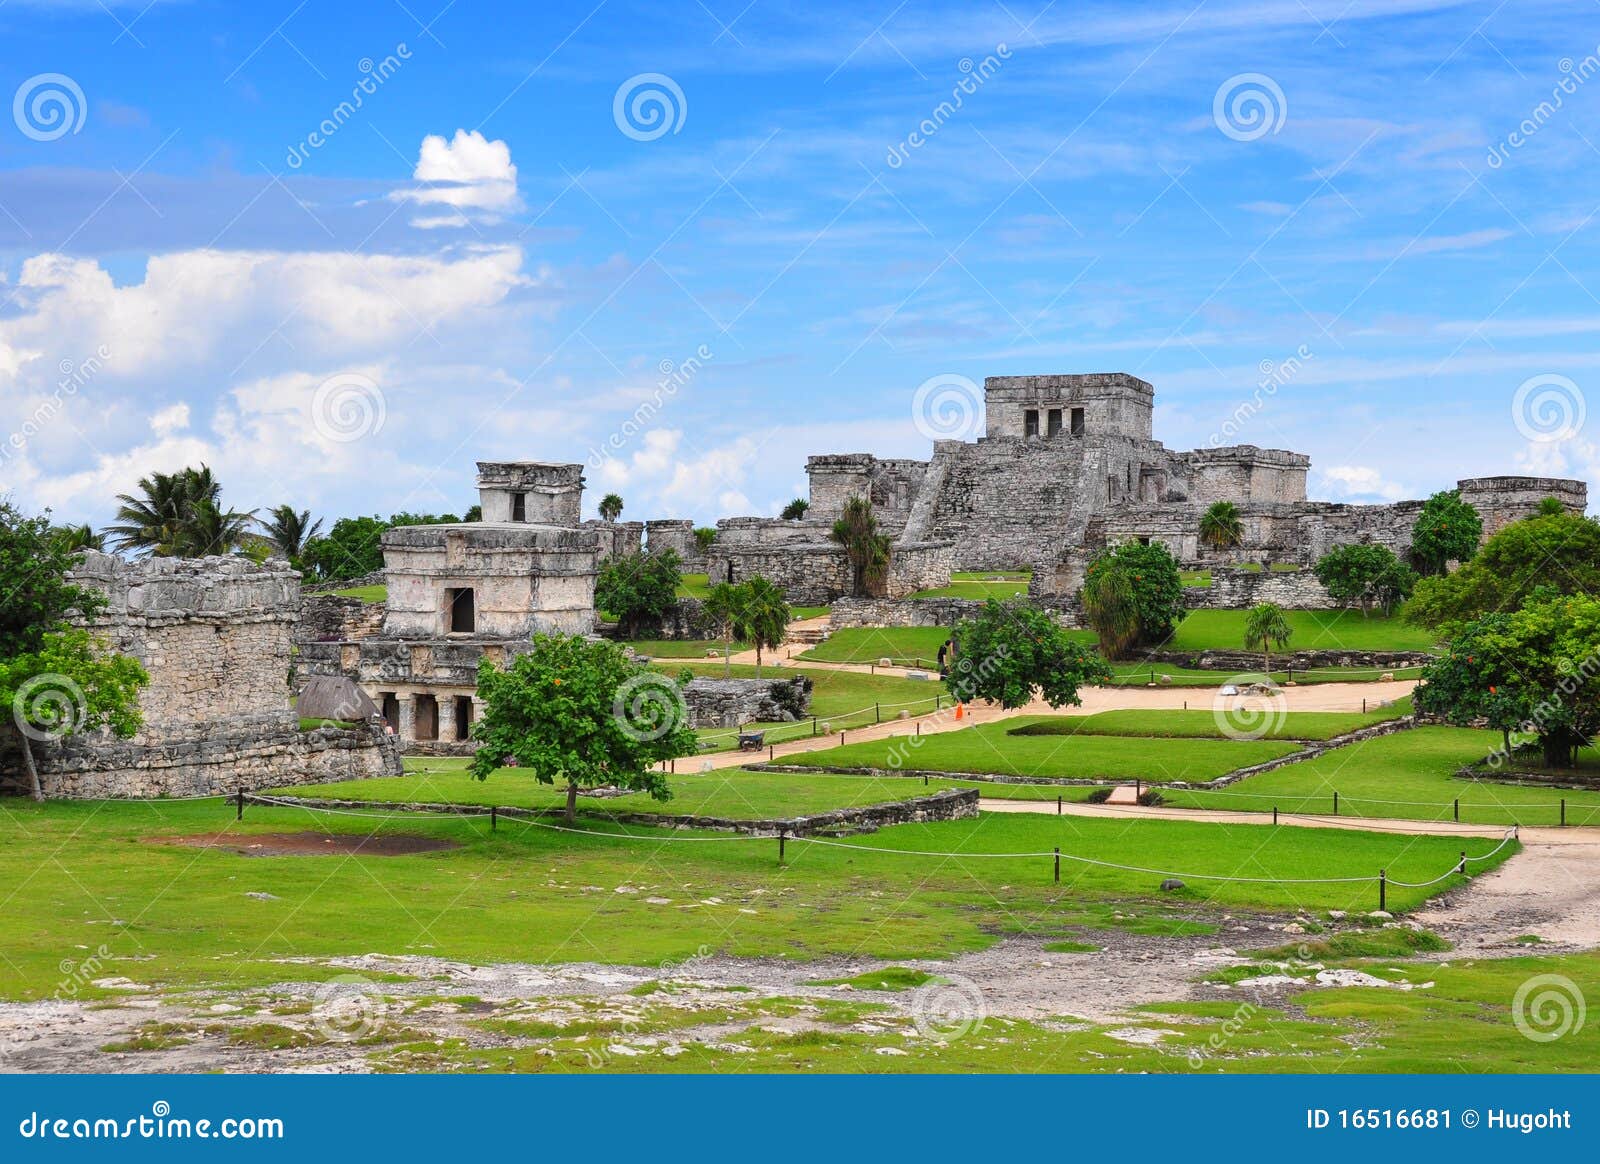 tulum maya ruins, mexico